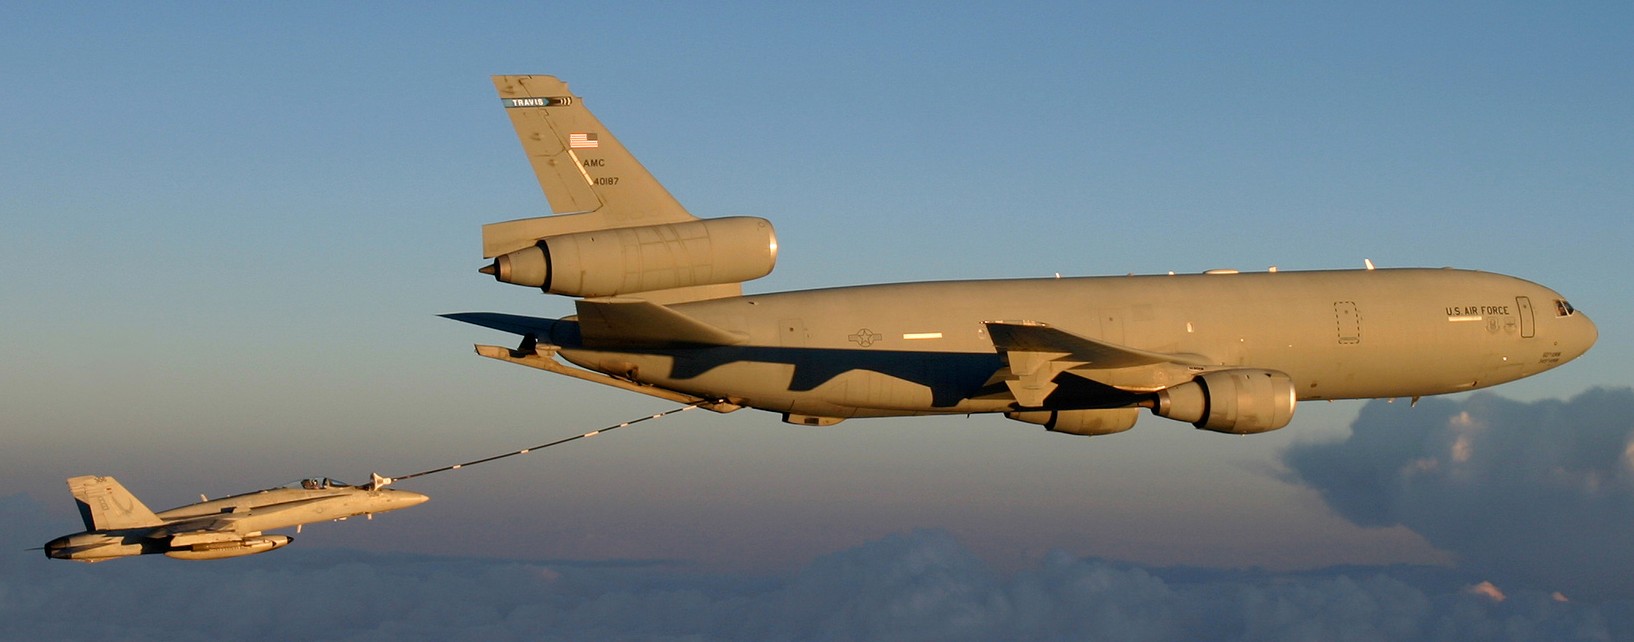 vfa-136 knighthawks strike fighter squadron f/a-18c hornet 2006 41 cvw-1 uss enterprise cvn-65 afghanistan